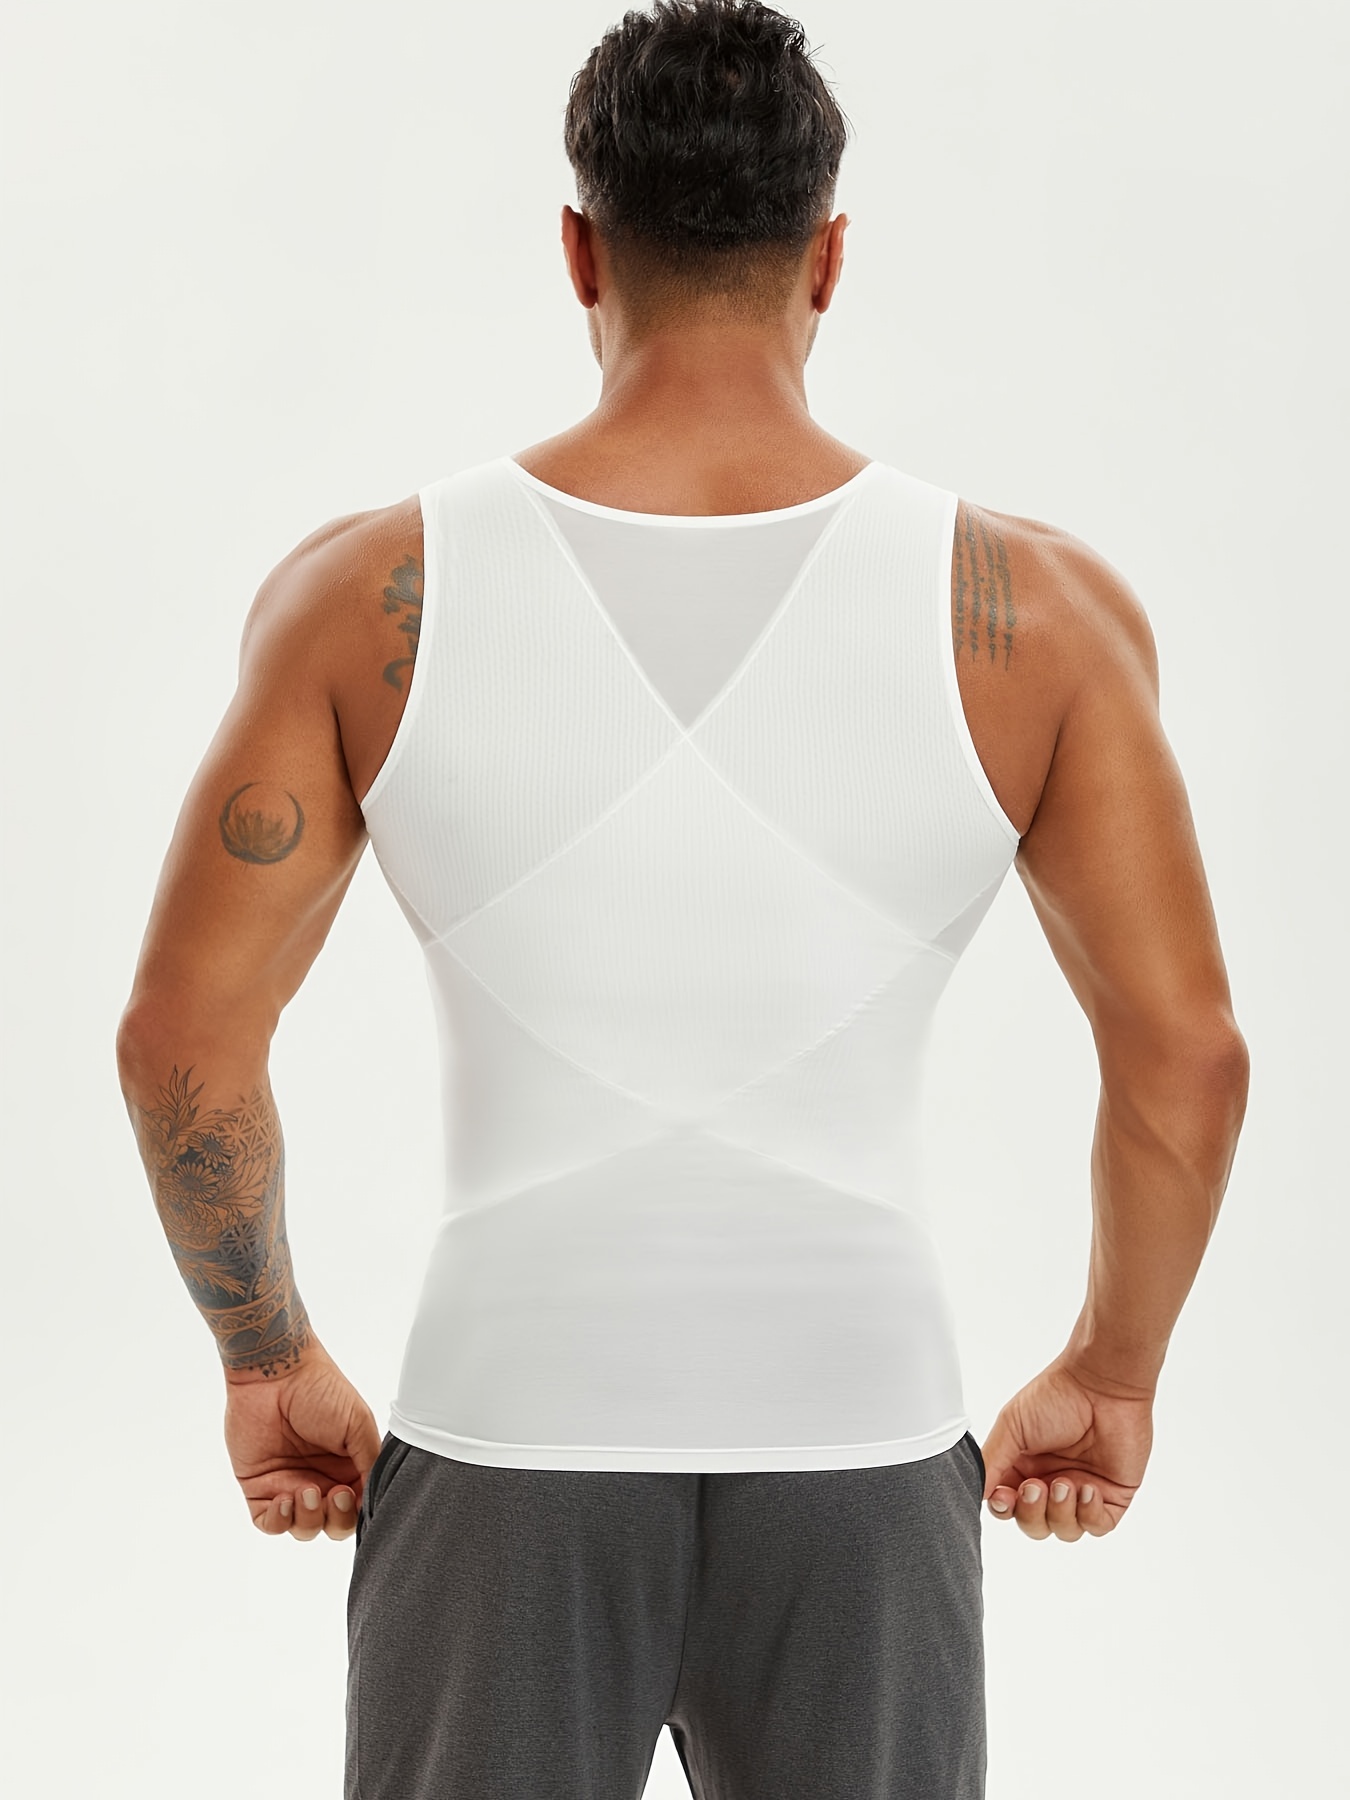  Mens Compression Shirt For Body Shaper Slimming Vest Tight Tummy  Underwear Tank Top